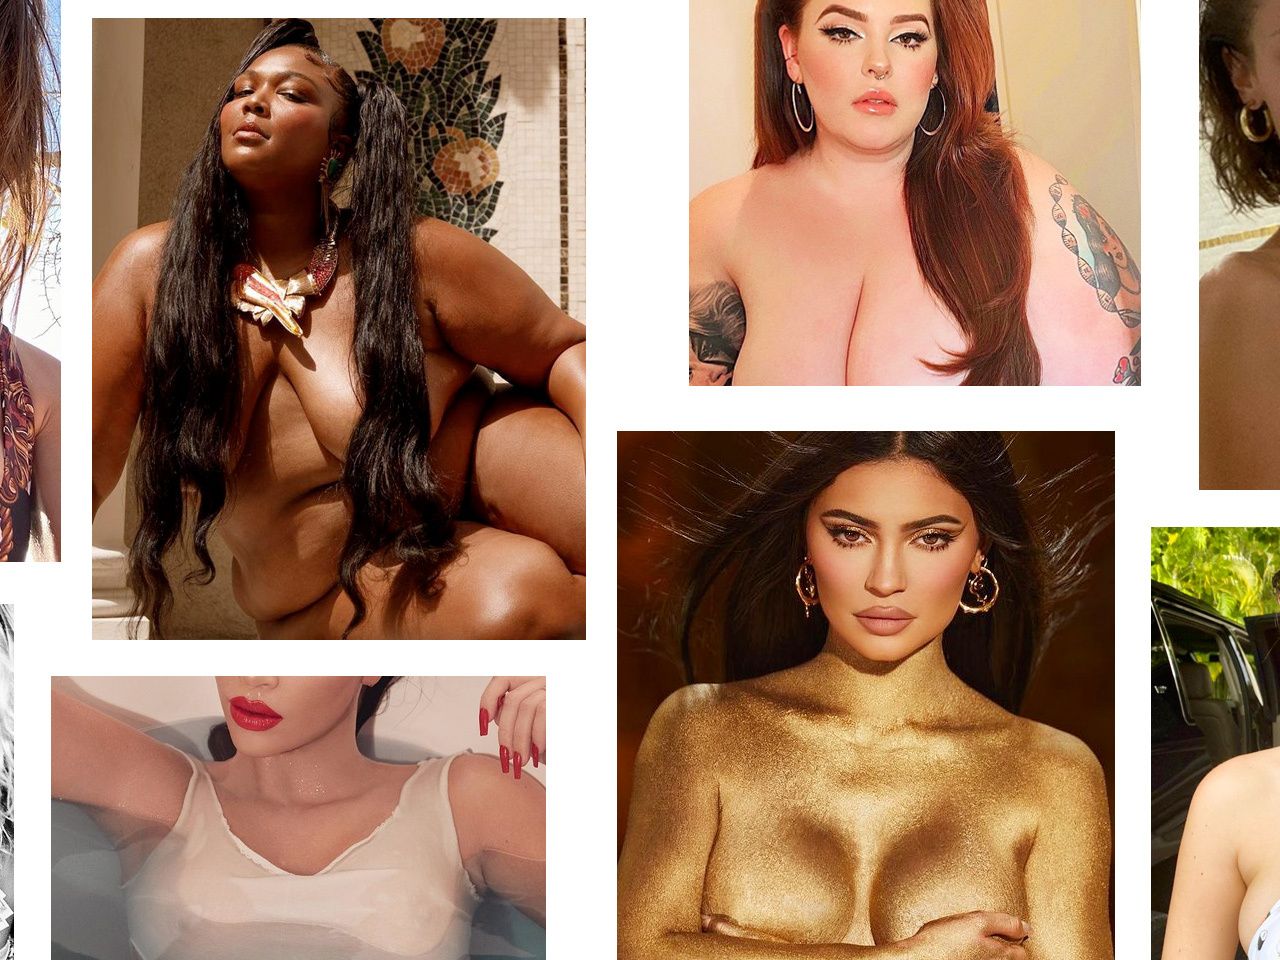 daniel ragosta share girls showing her boobs photos